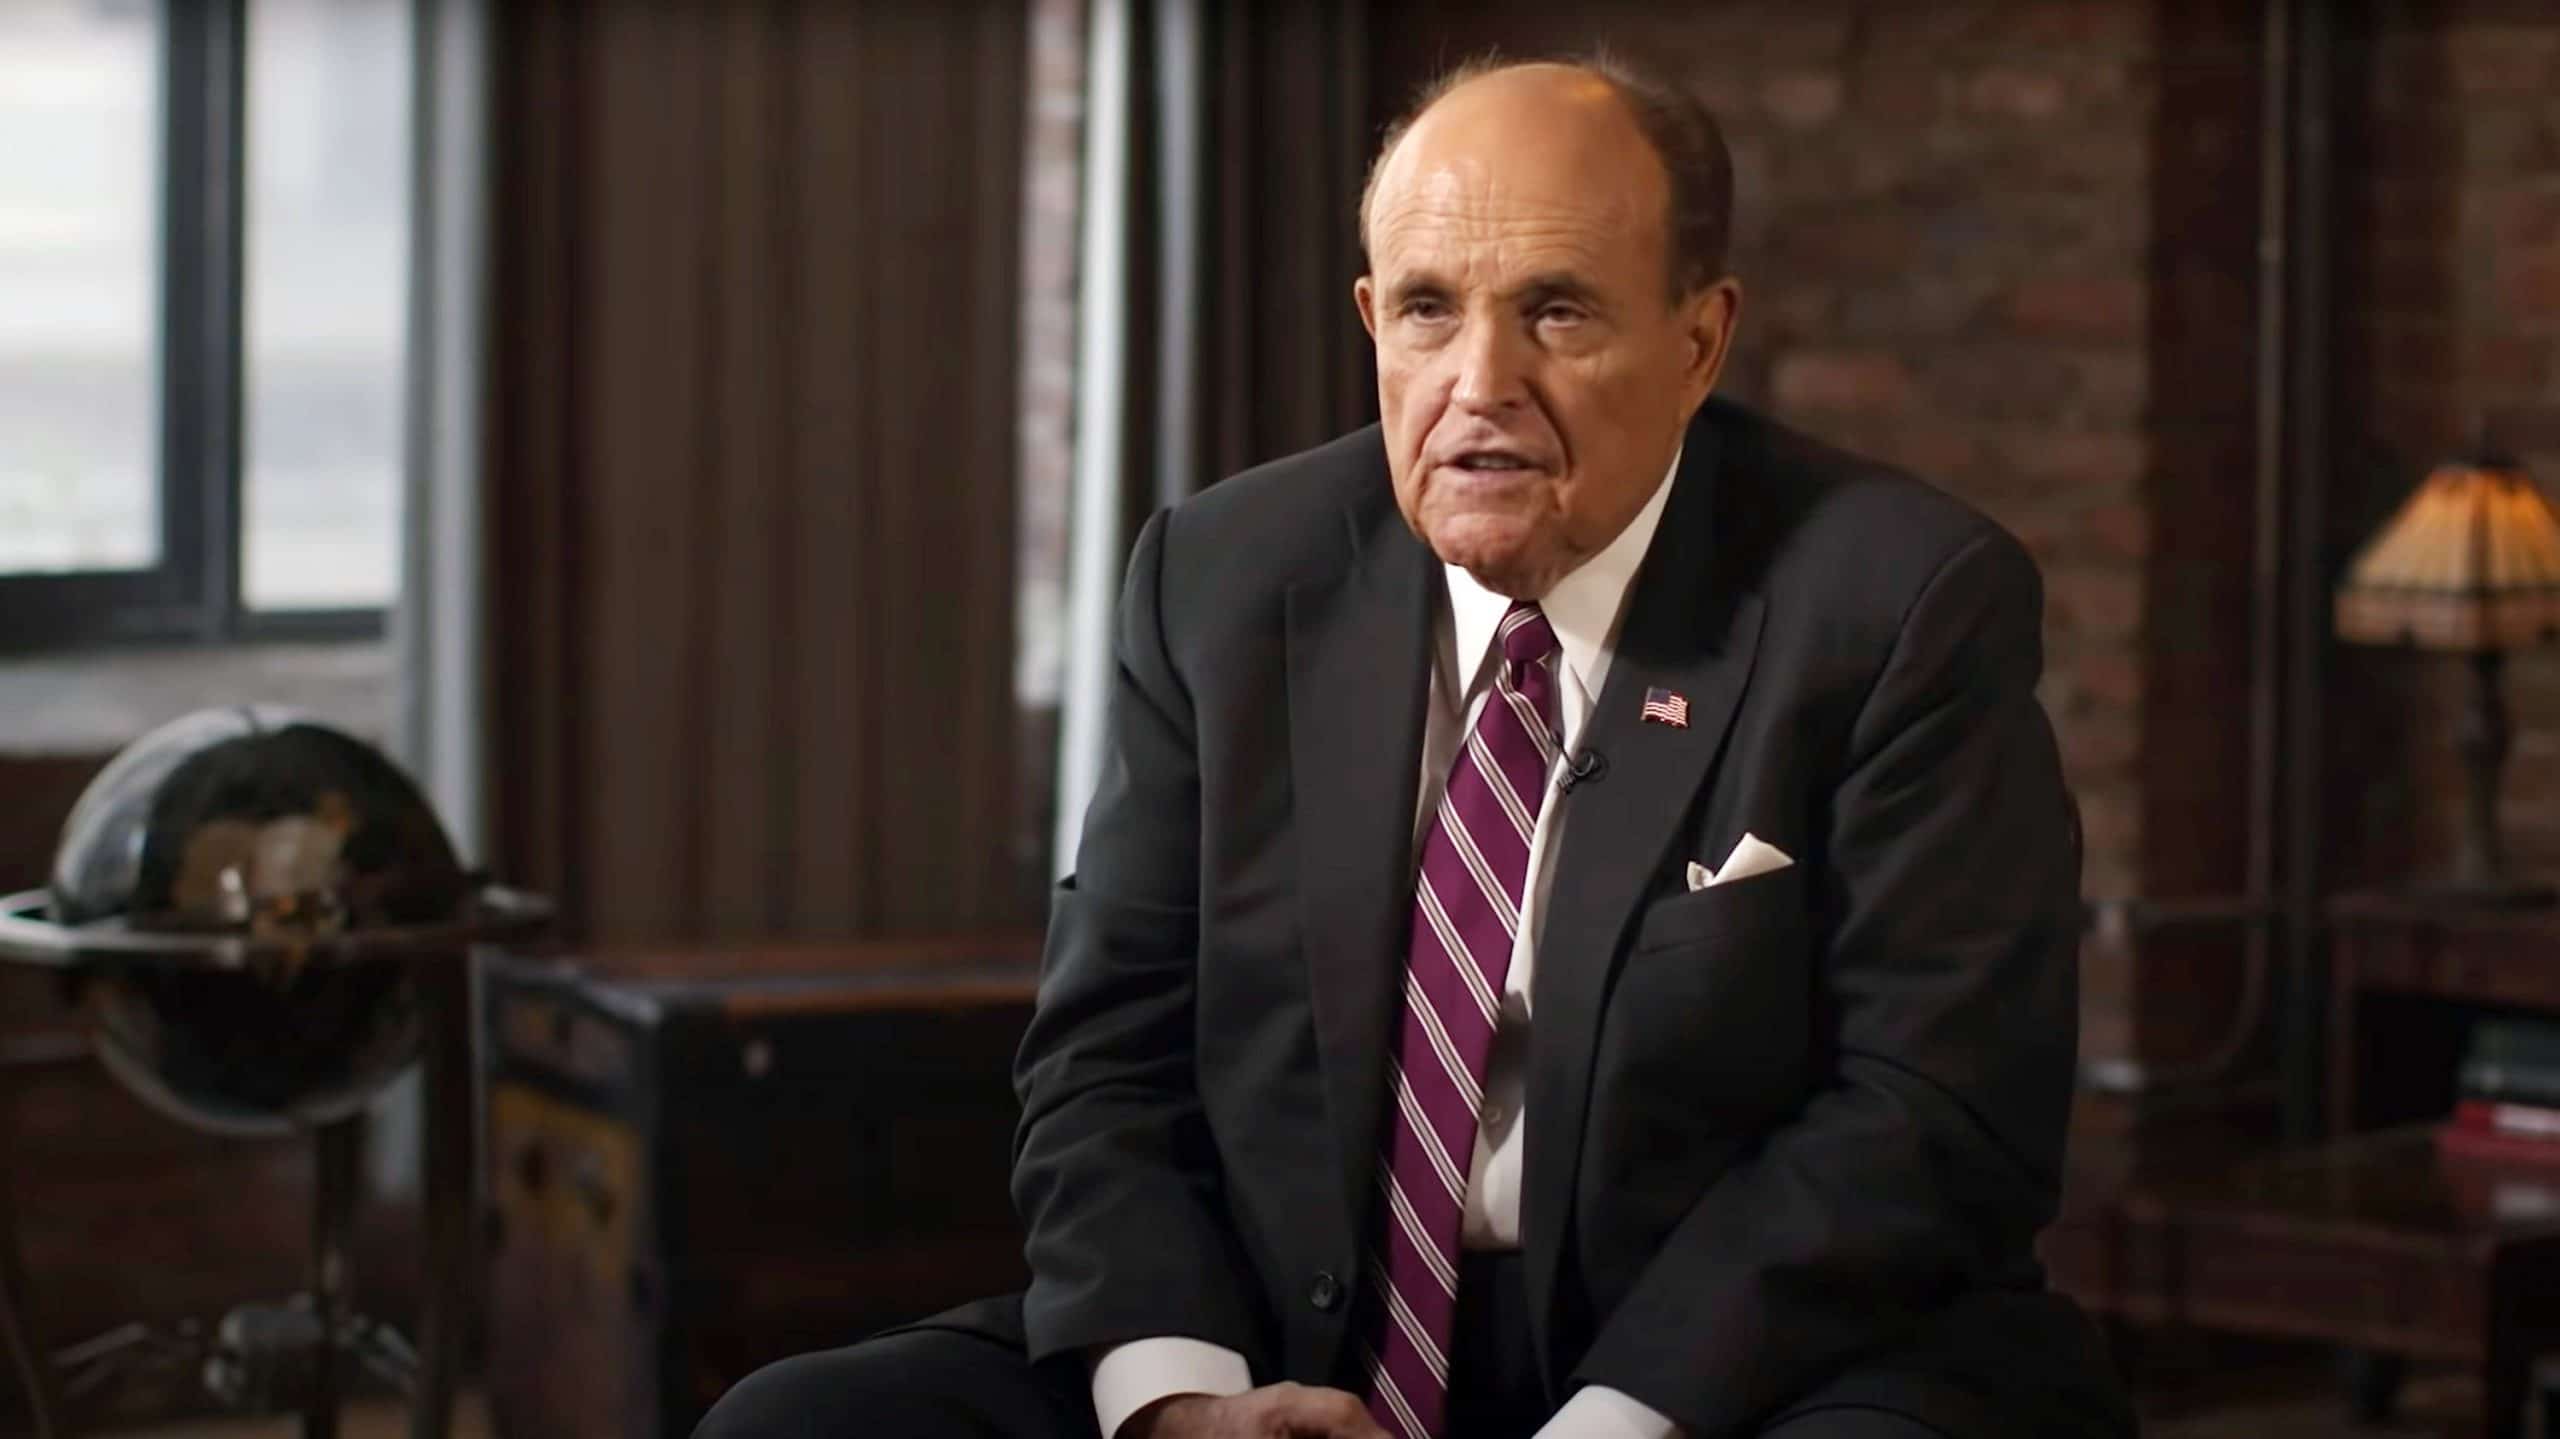 THE PLOT AGAINST THE PRESIDENT, former New York City Mayor Rudy Giuliani, 2020